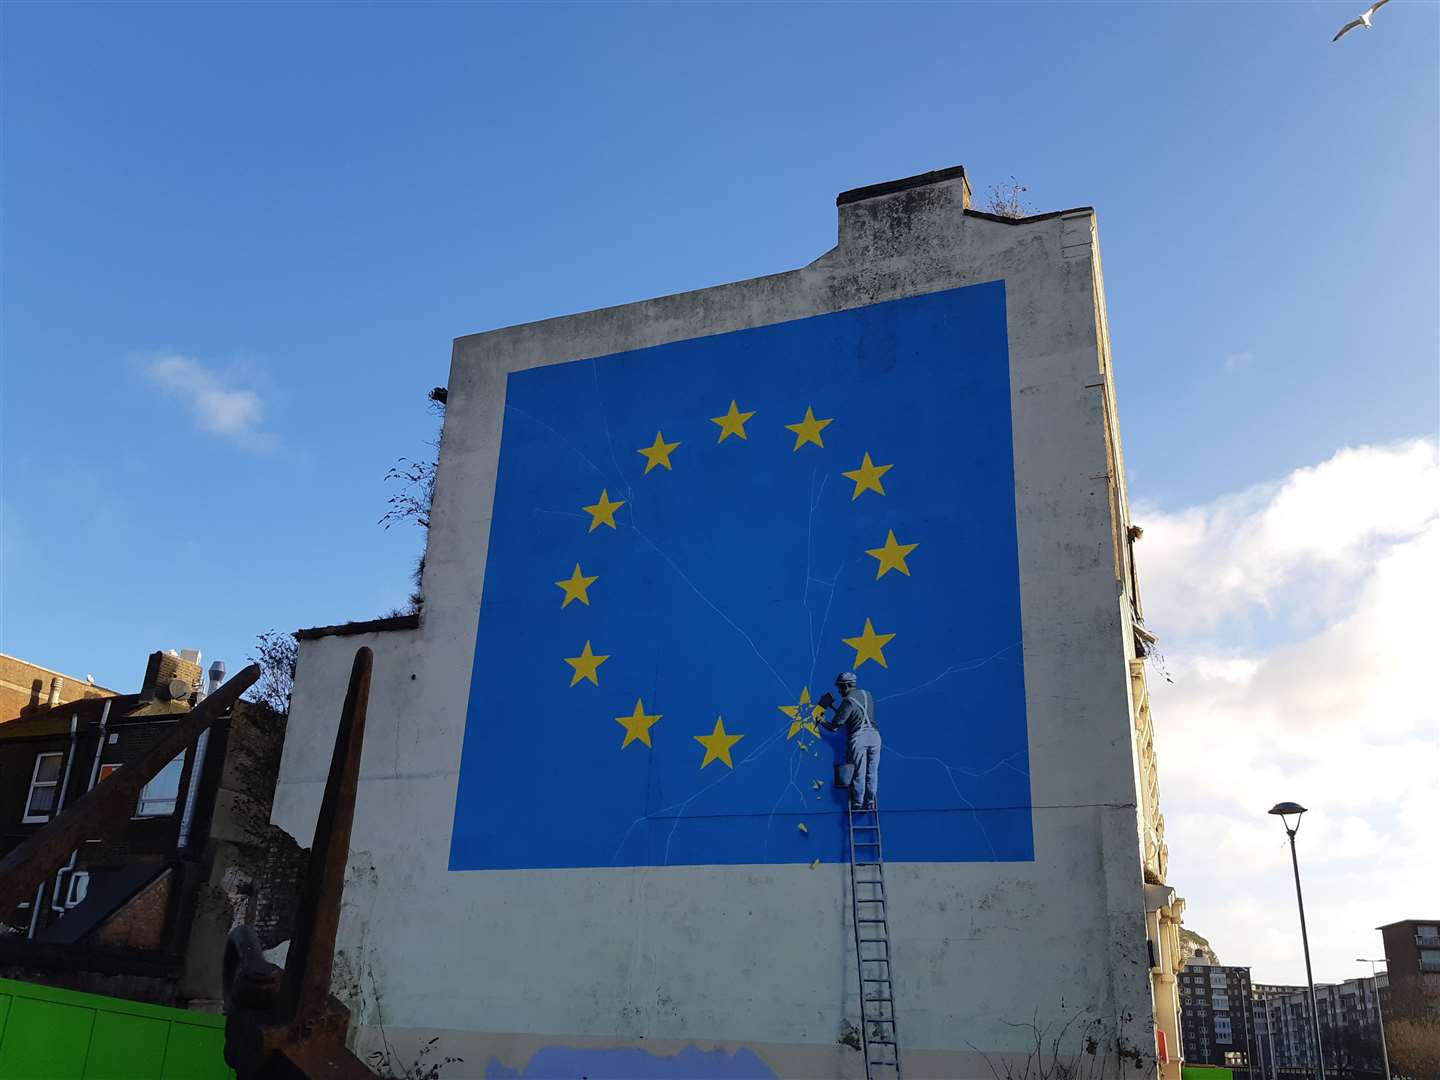 The Dover Banksy